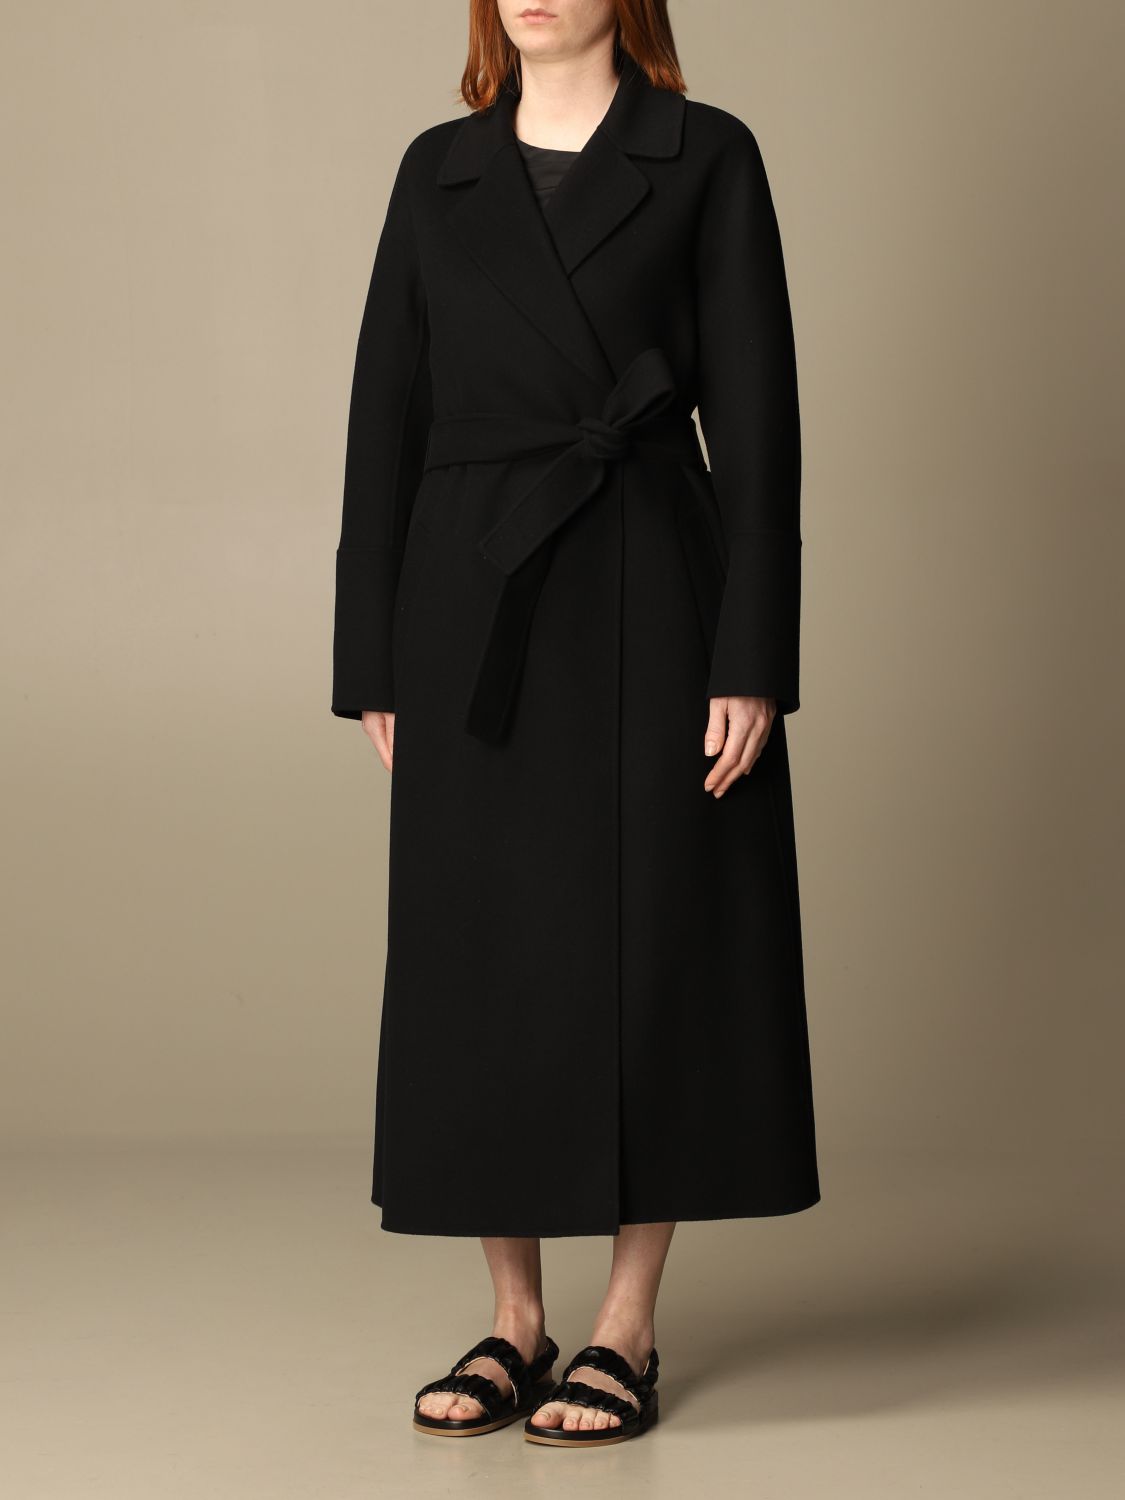 S MAX MARA: coat in virgin wool | Coat S Max Mara Women Black | Coat S ...